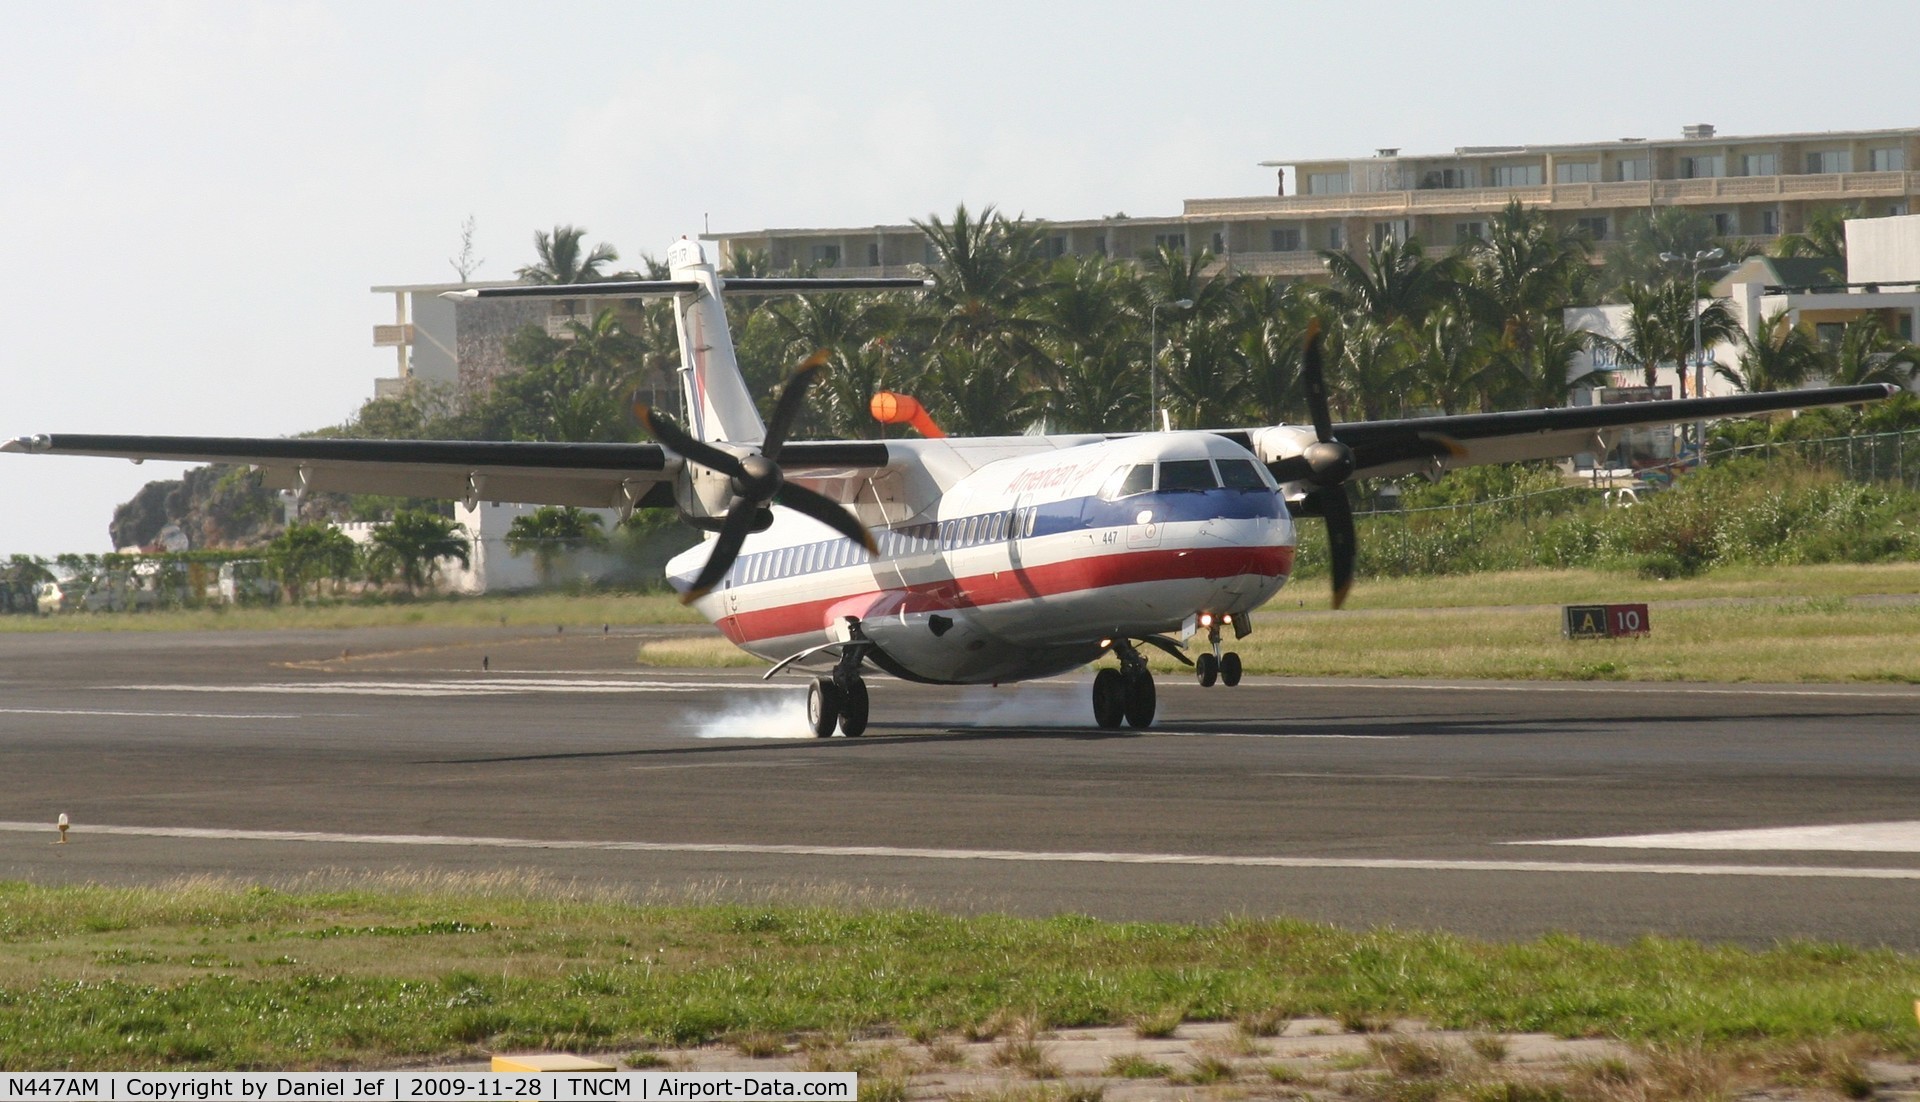 N447AM, 1995 ATR 72-212 C/N 447, american eagle landing at tncm